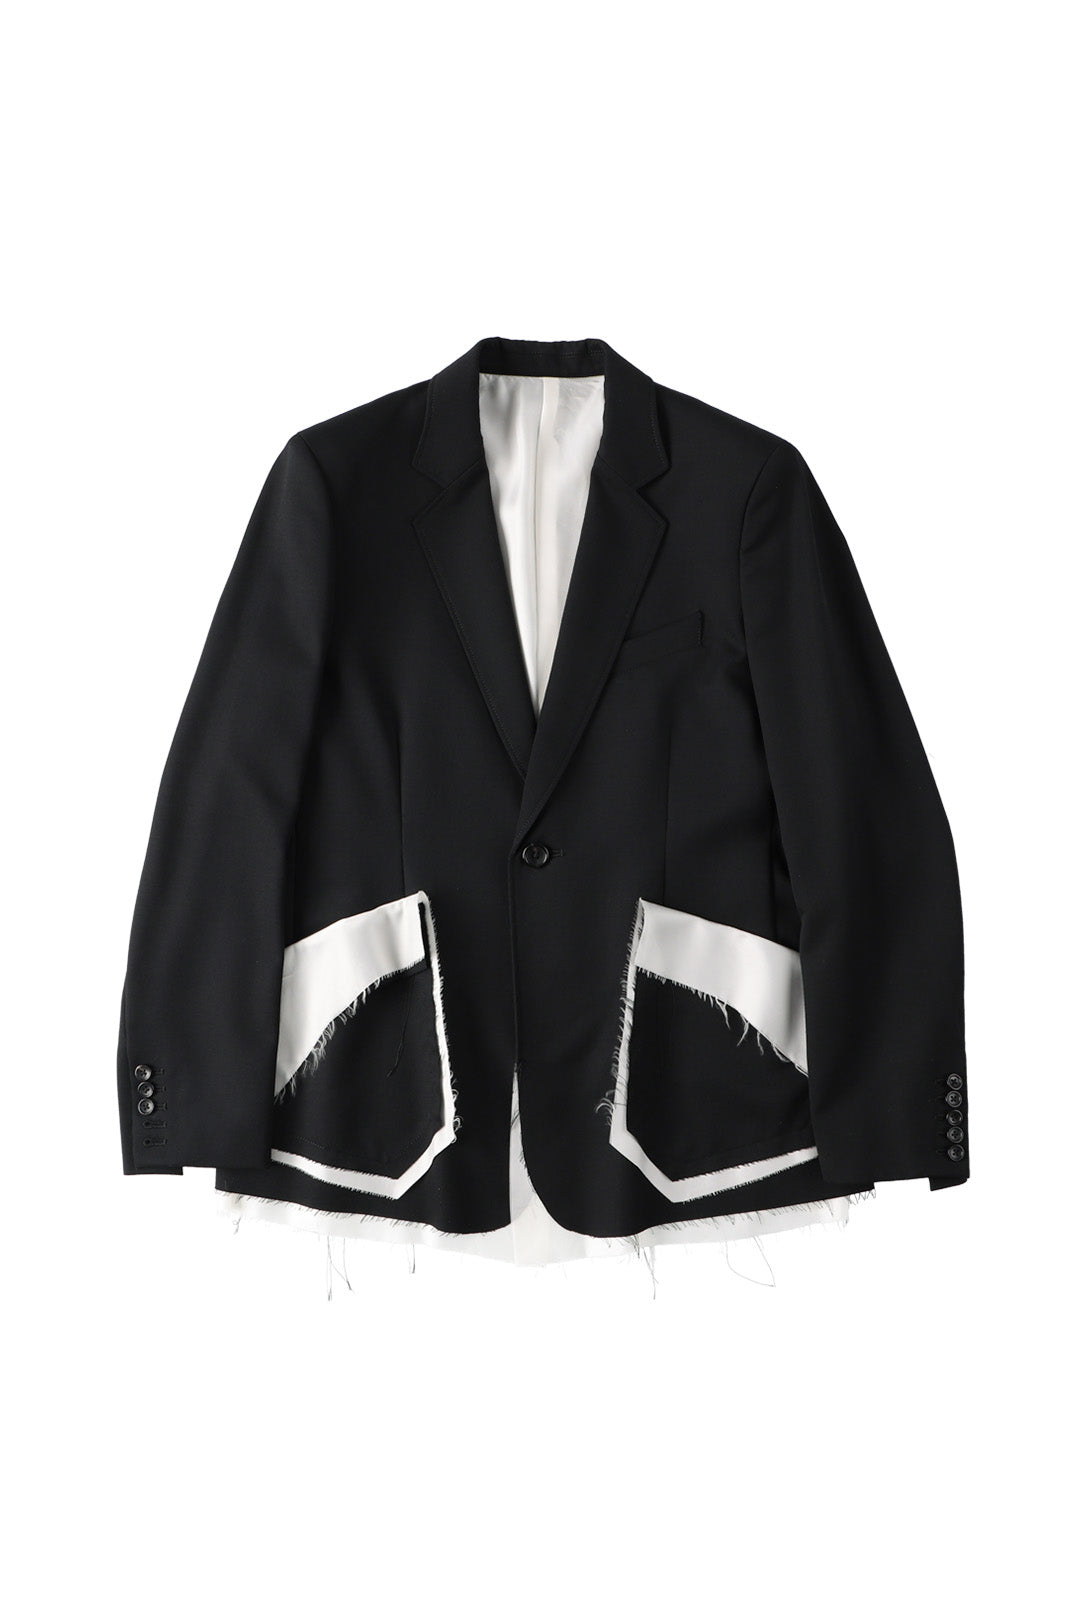 sulvam Classic short jacket black AW22 | sulvam online store